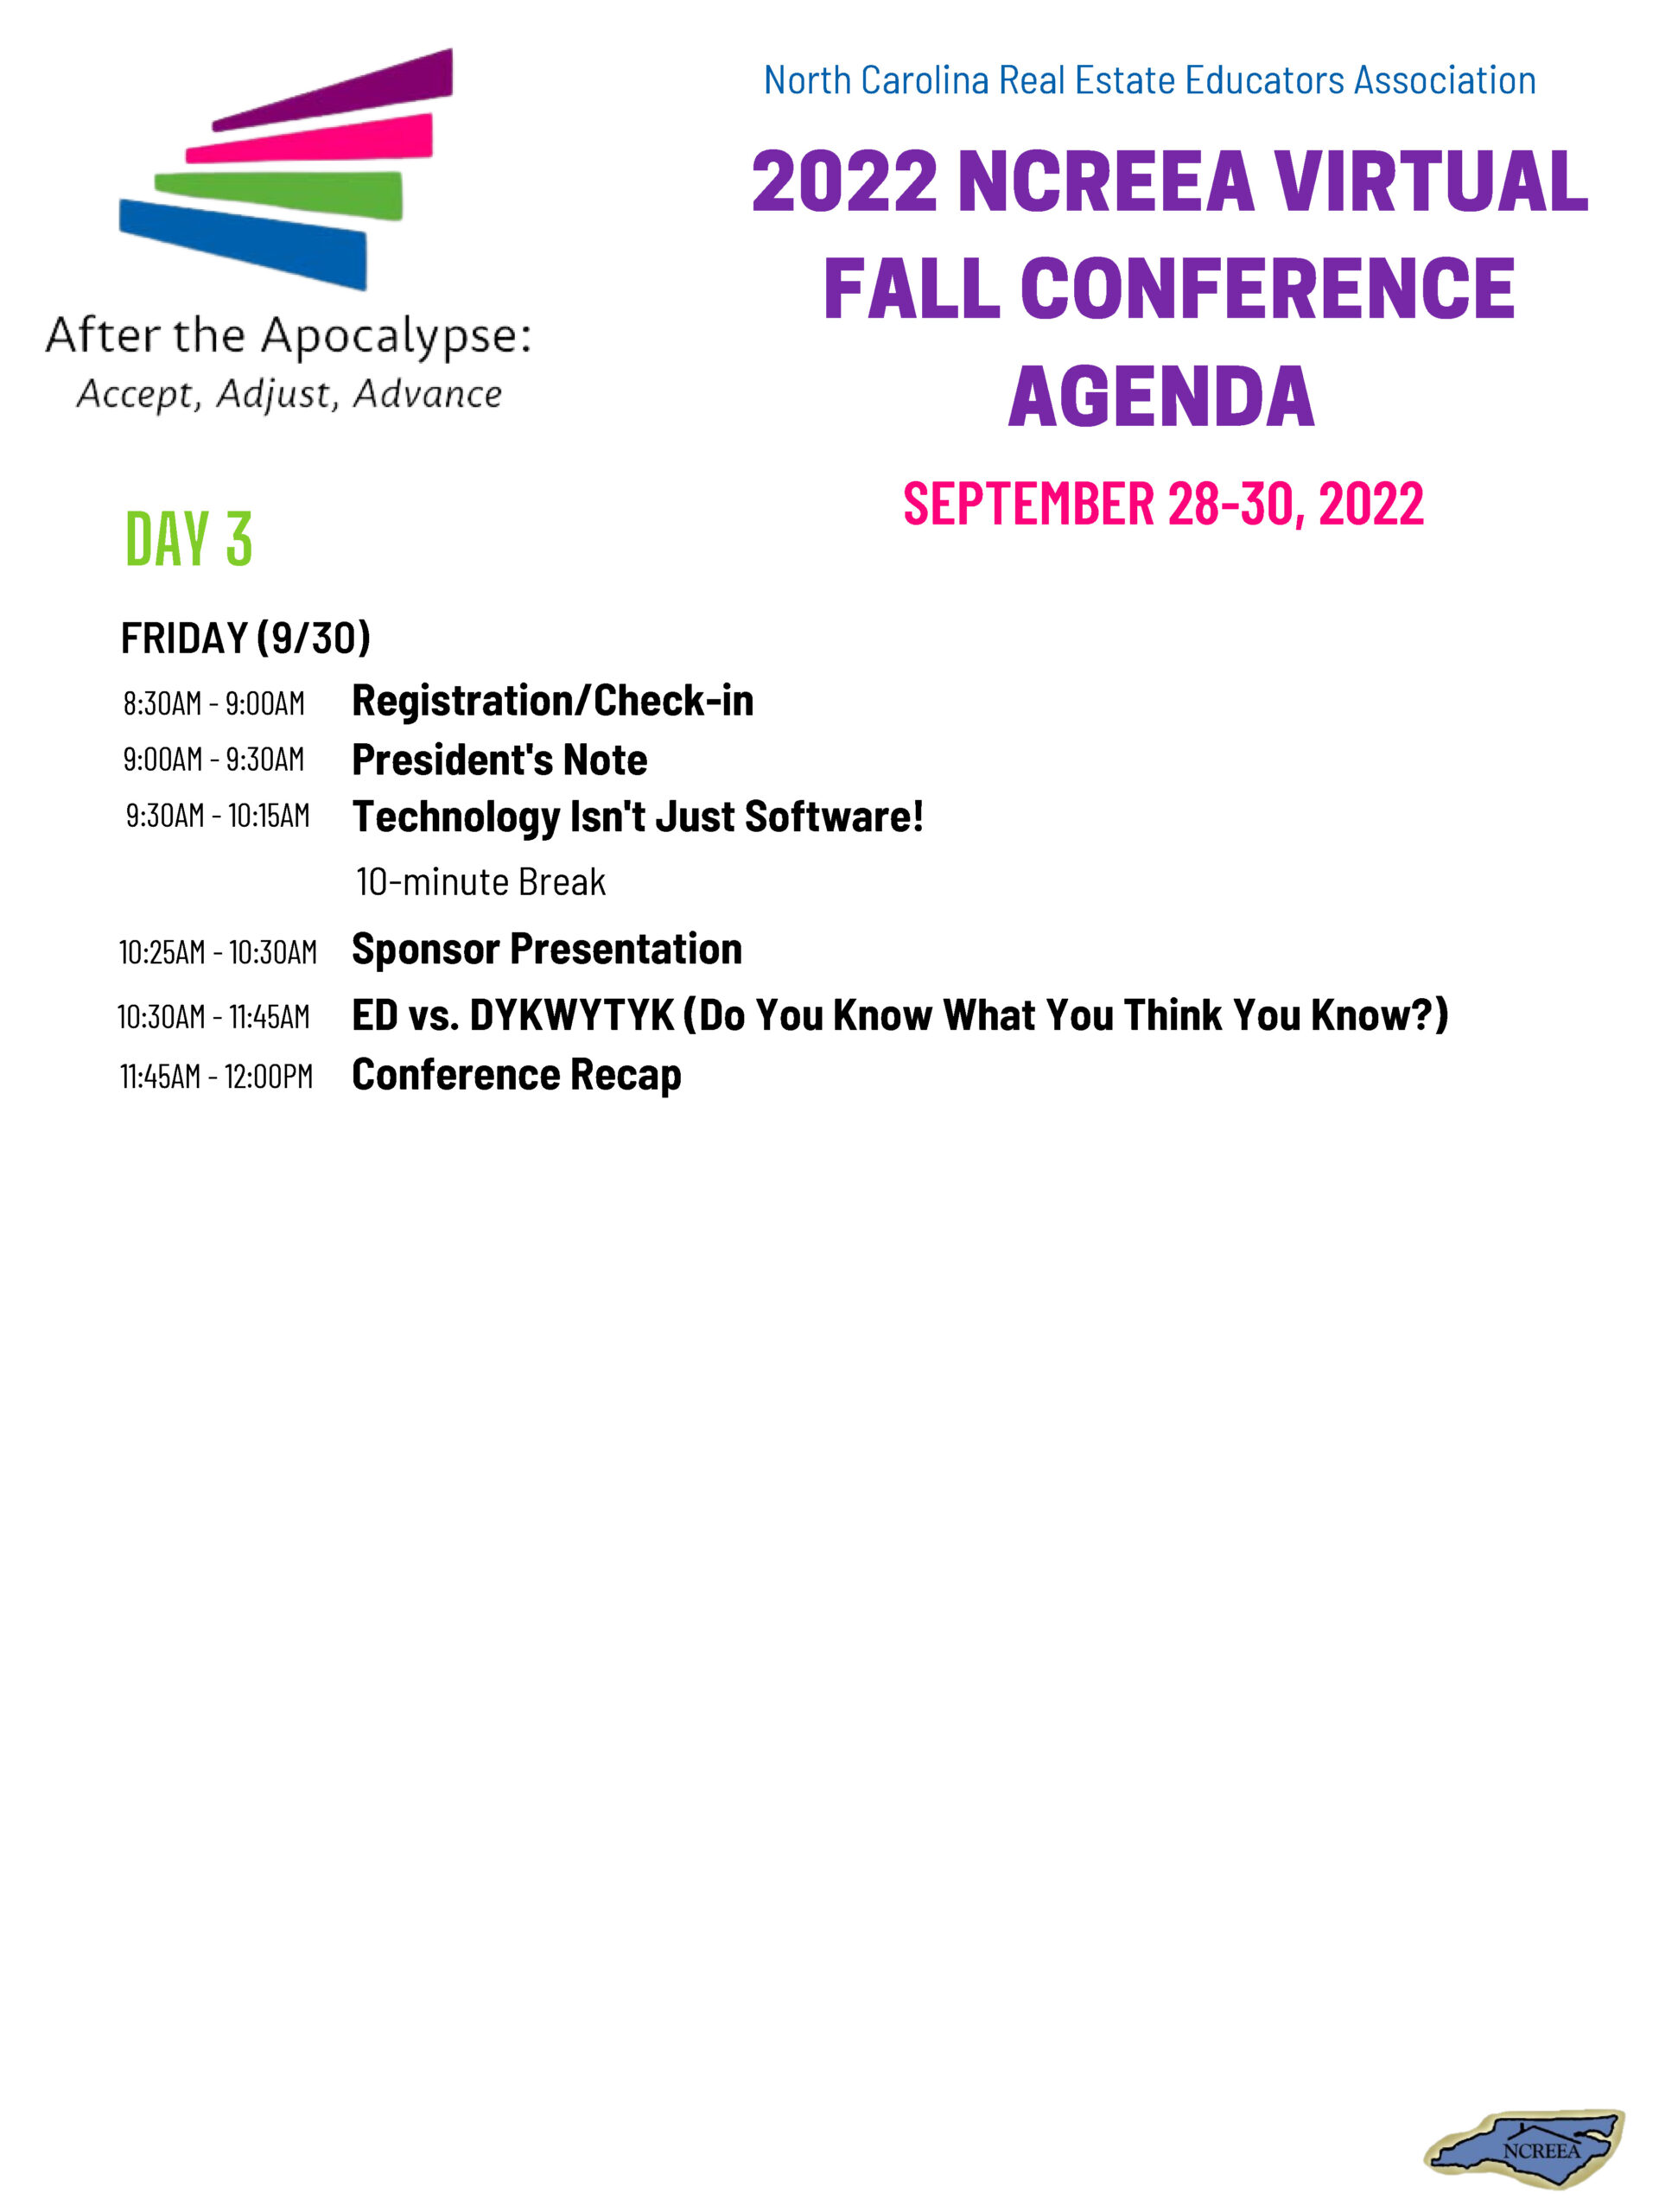 2022 NCREEA Virtual Fall Conference Agenda (1)_Page_2